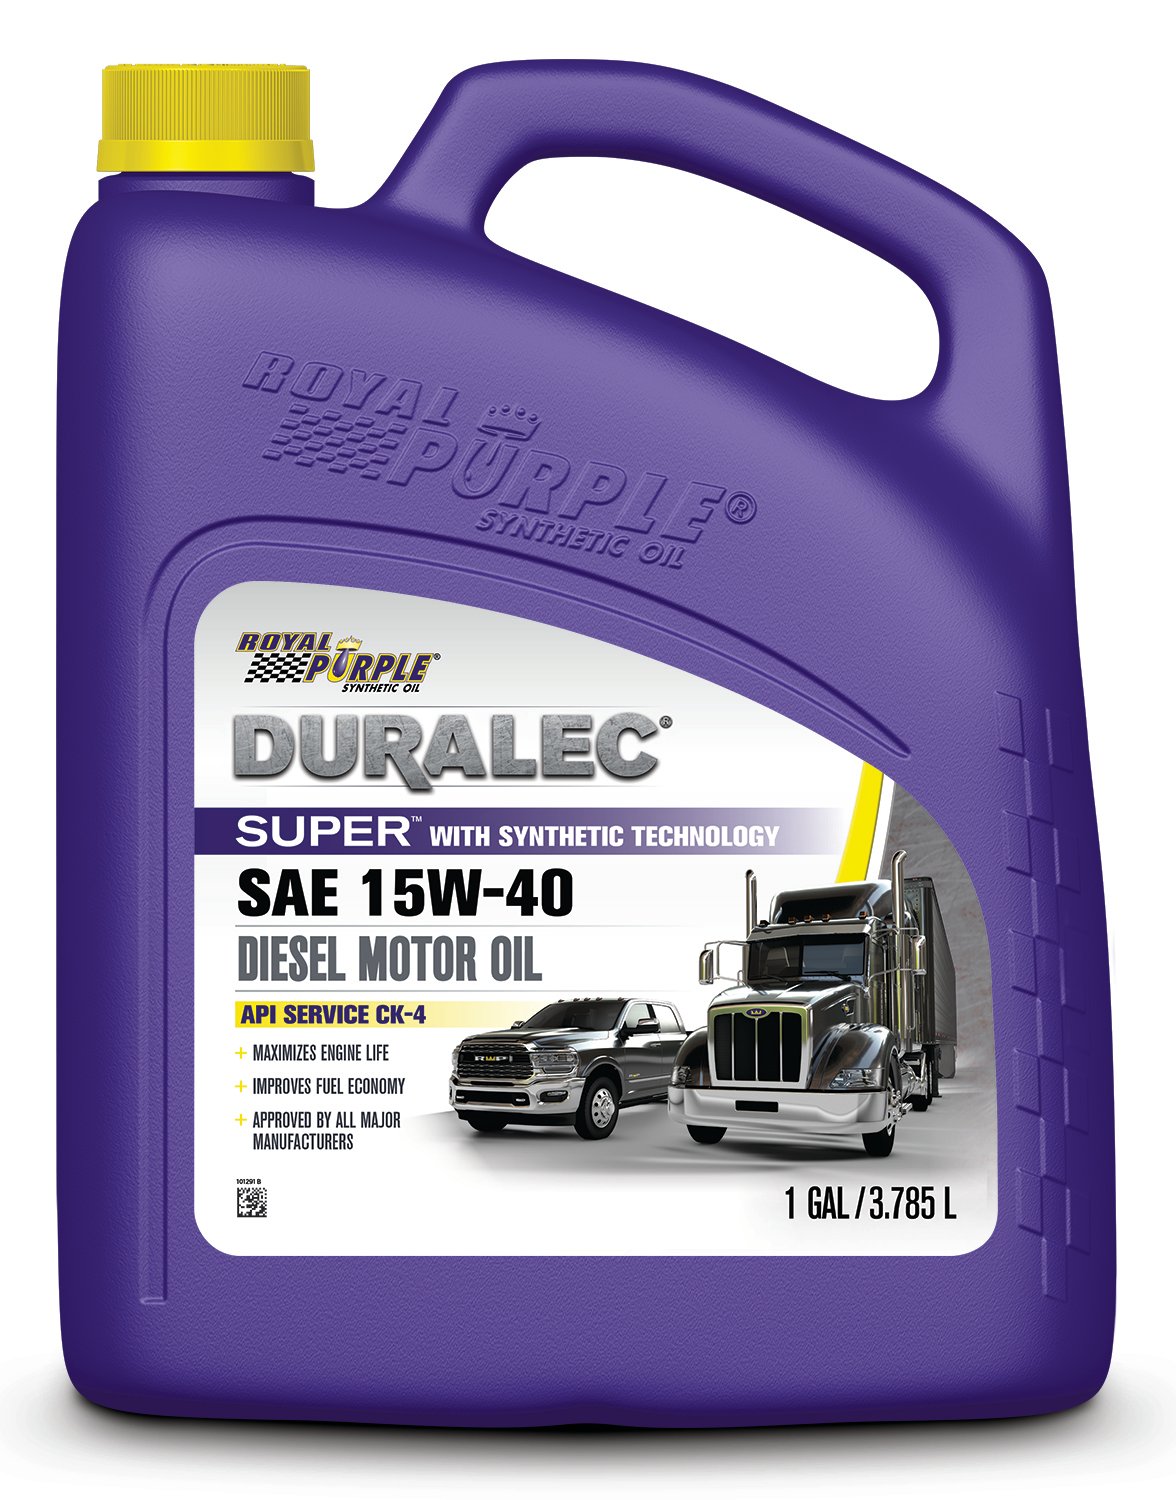 Duralec Super Diesel Motor Oil 15W-40, 1 Gallon